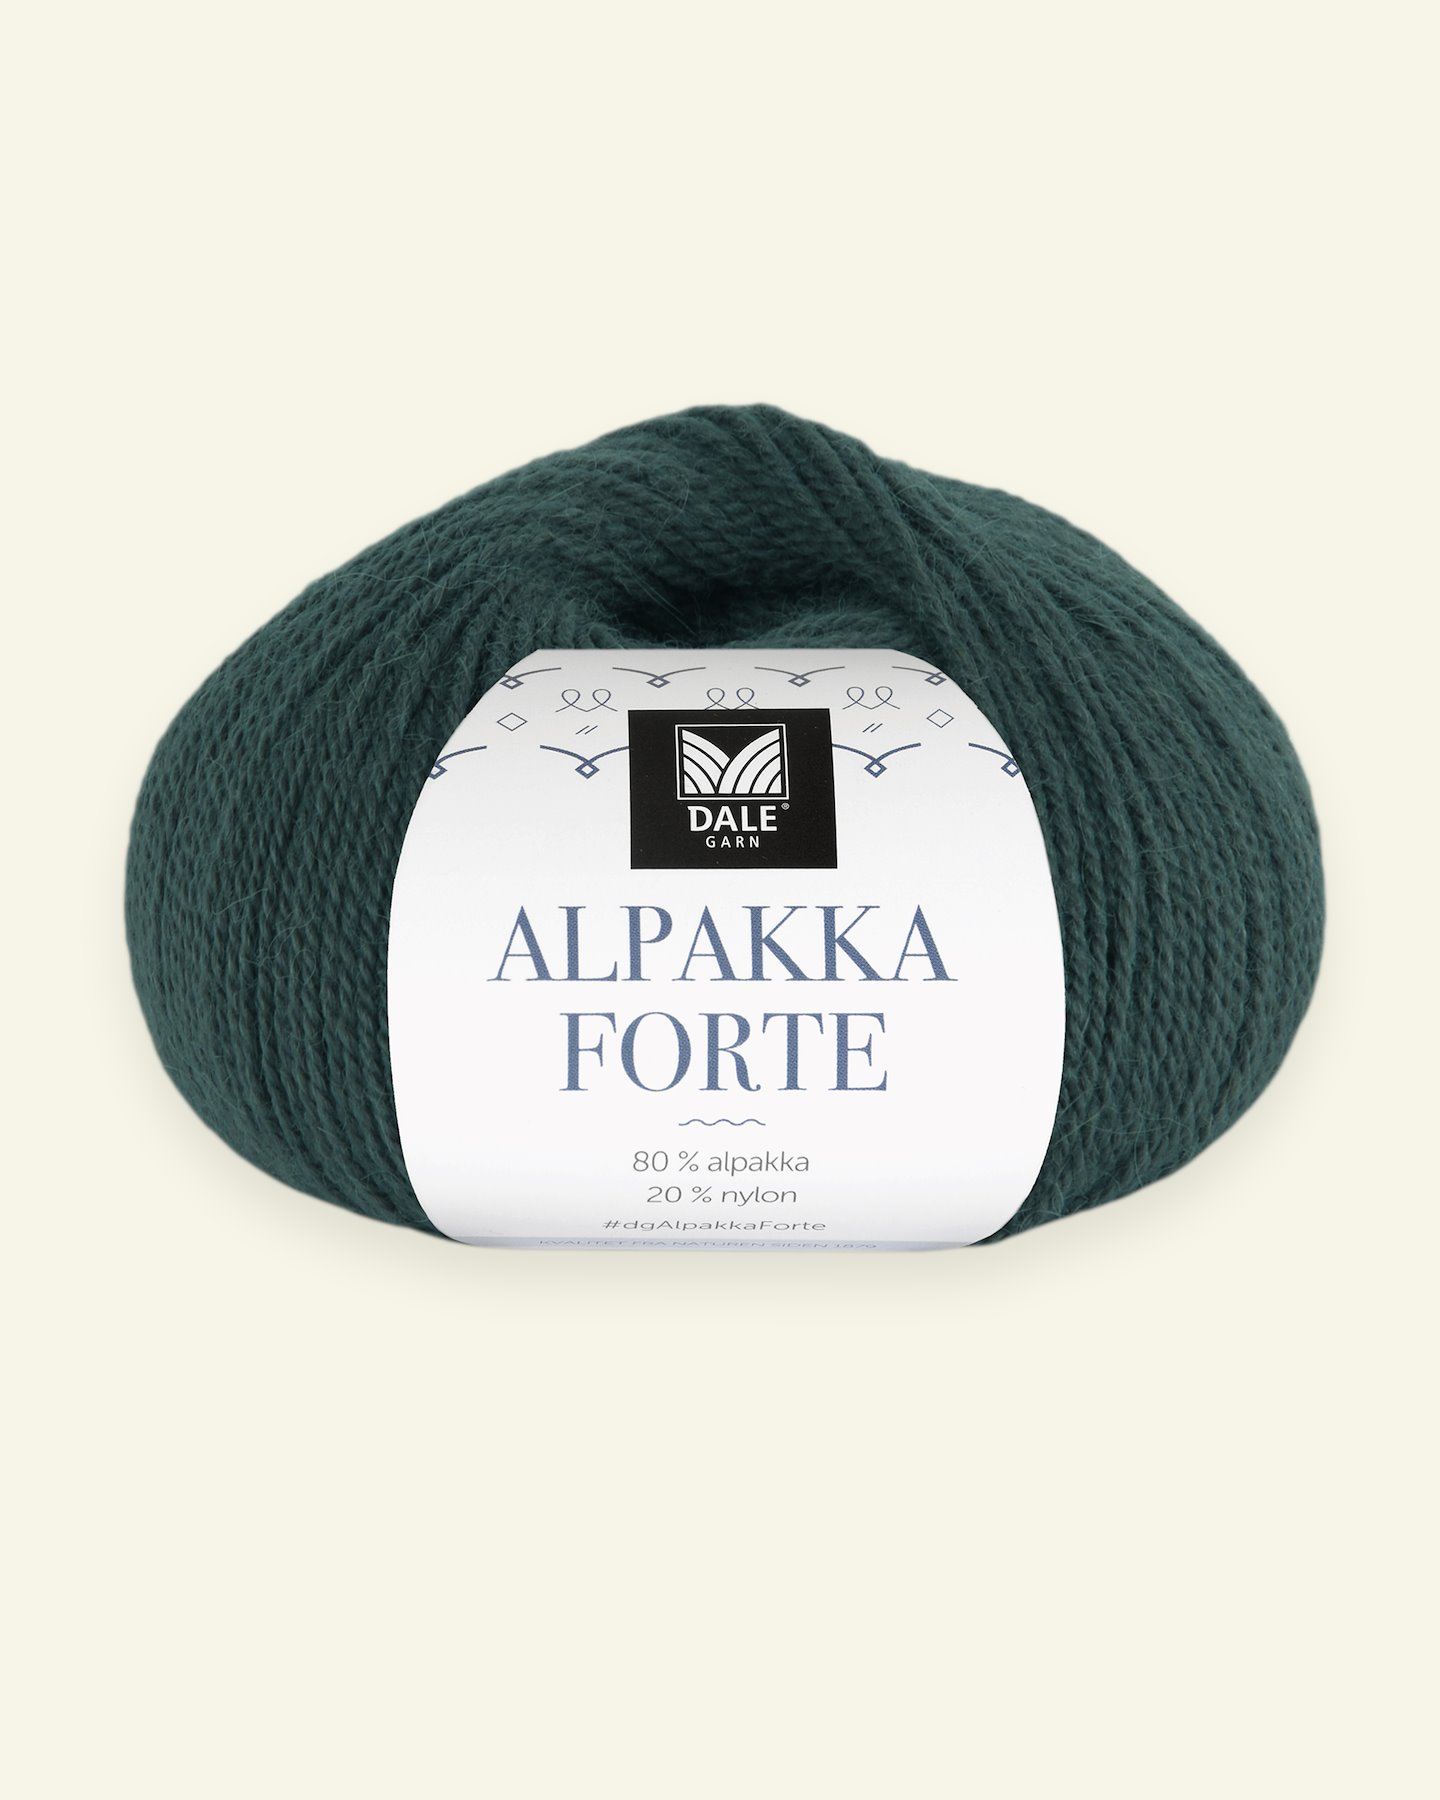 Dale Garn, alpaca yarn "Alpakka Forte", spruce green (737) 90000460_pack